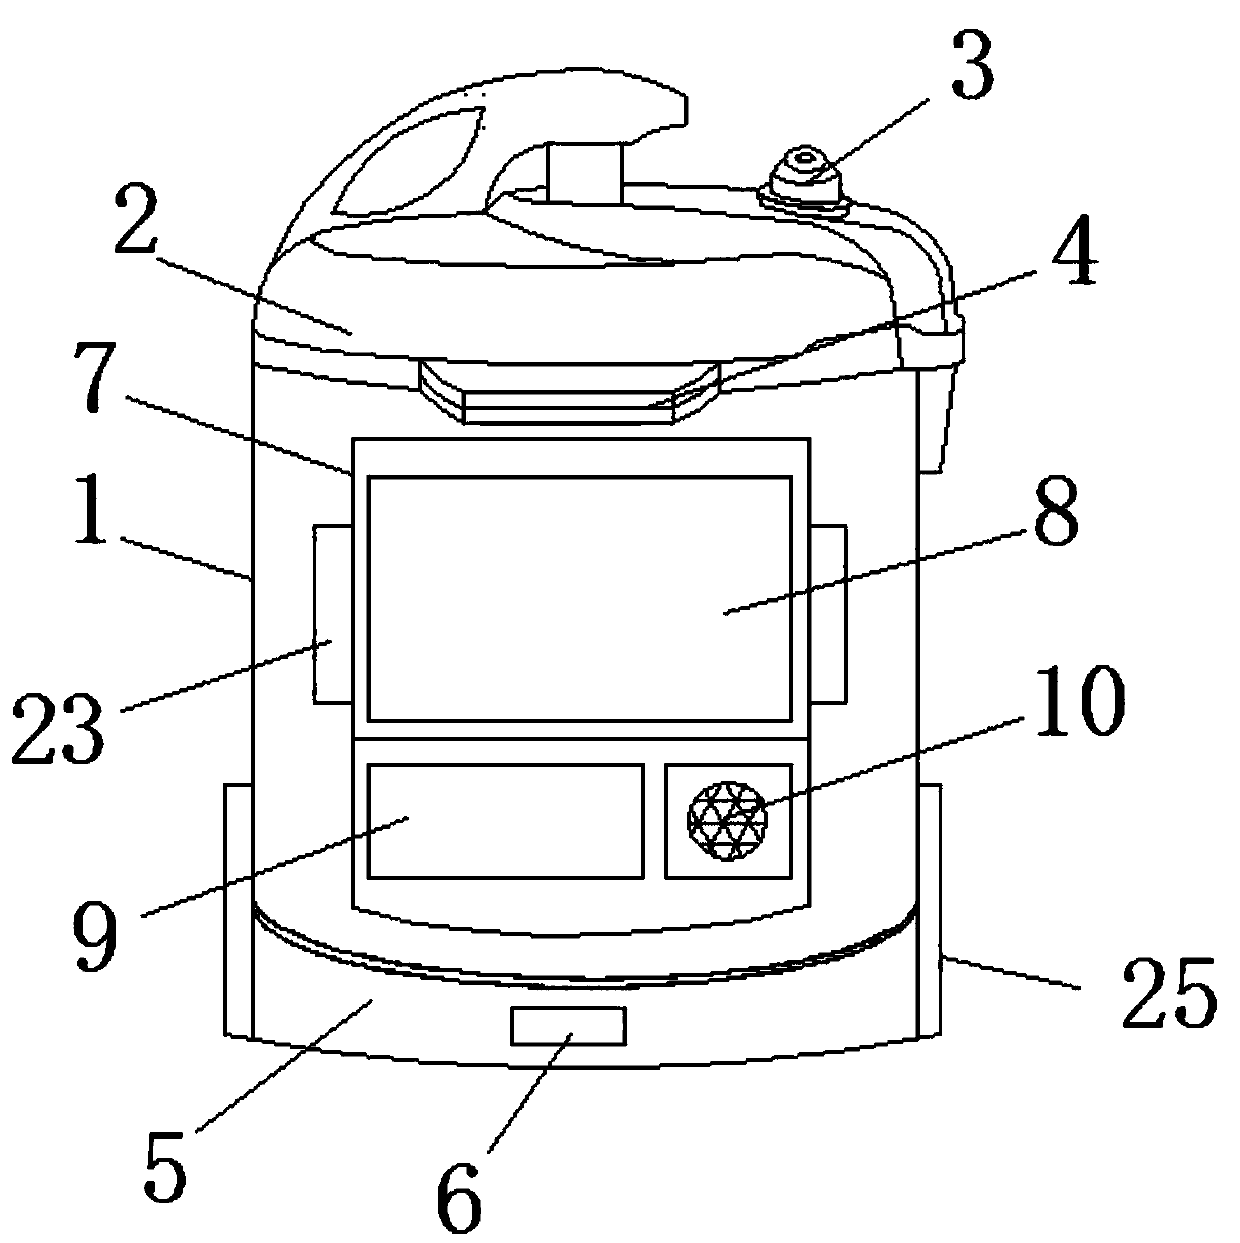 Pressure-controlled electric pressure cooker